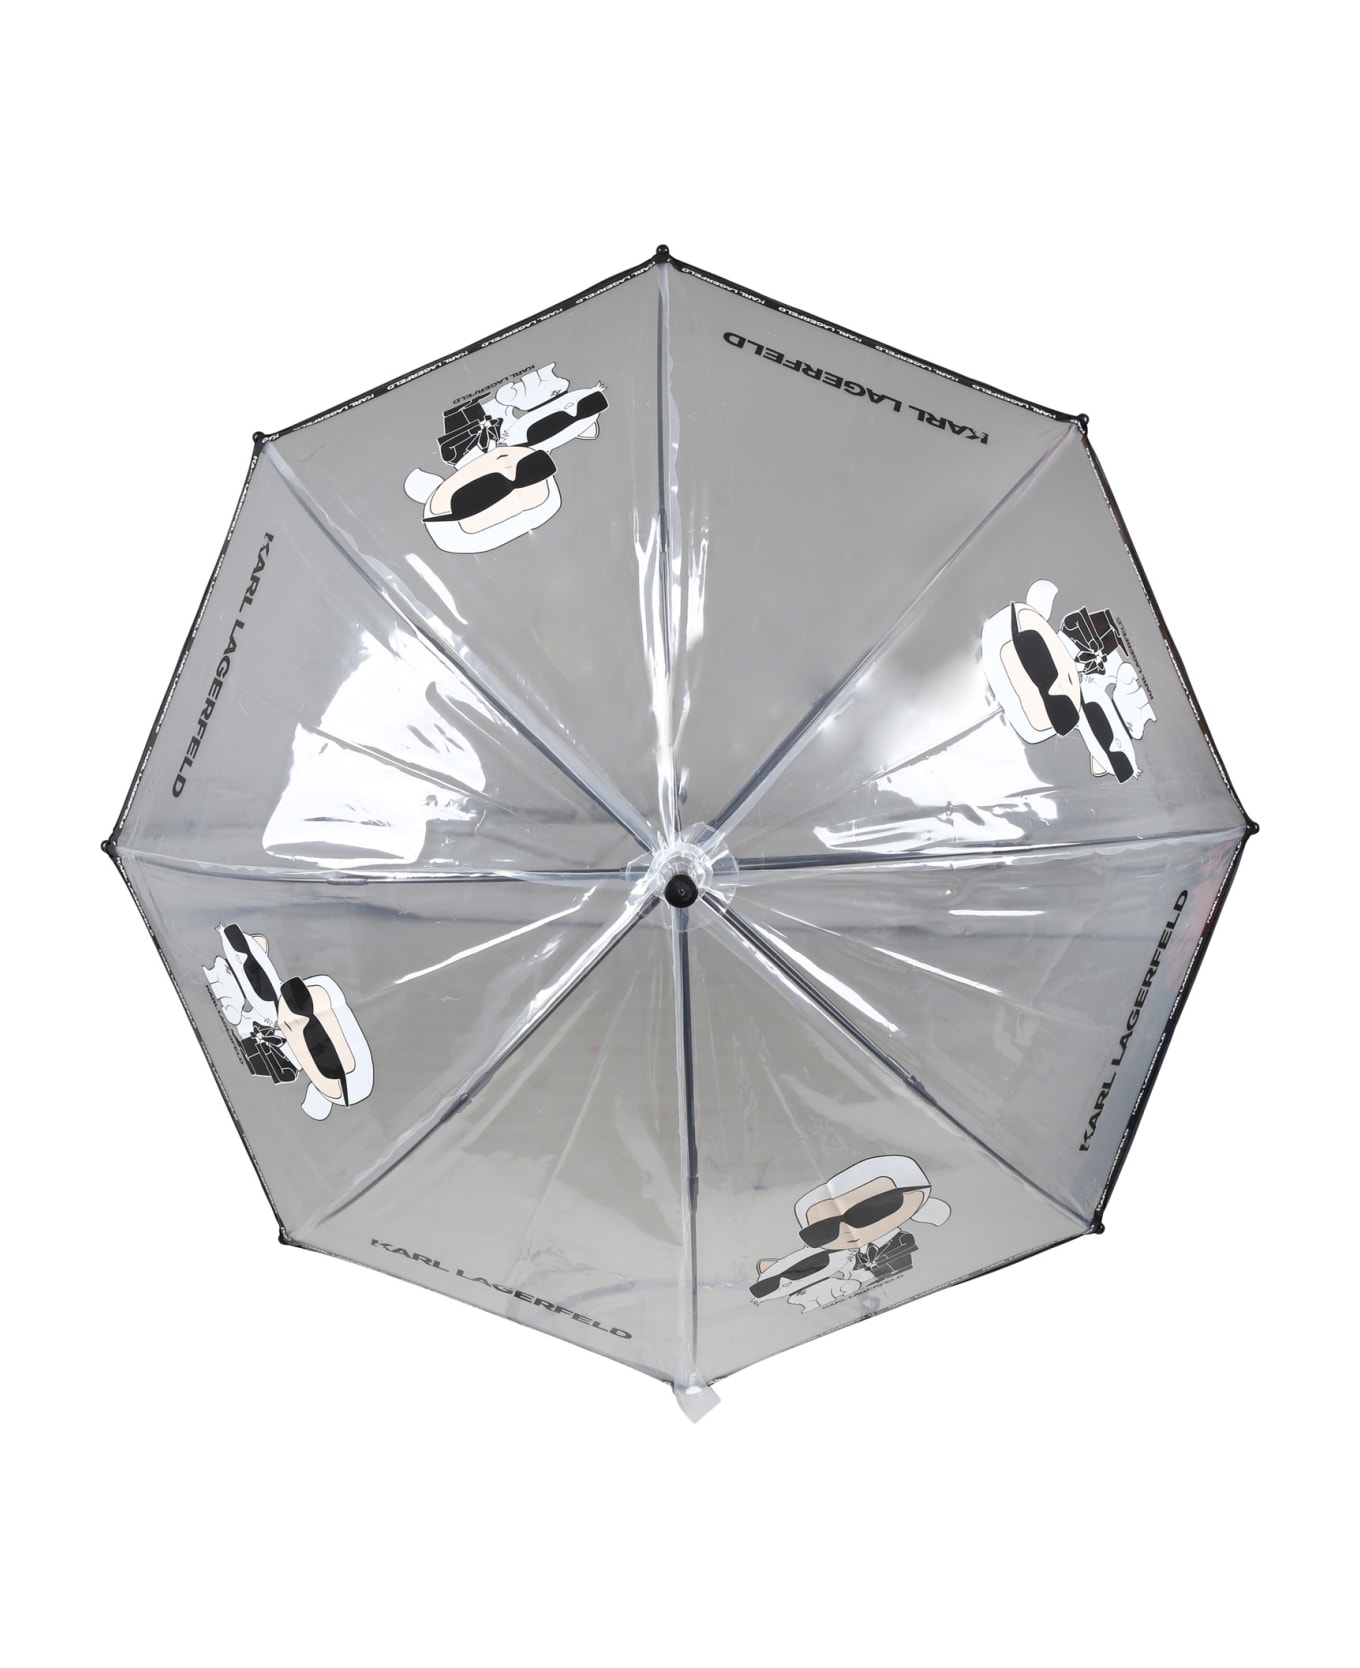 Karl Lagerfeld Kids Transparent Umbrella For Kids With Logo - Transparent